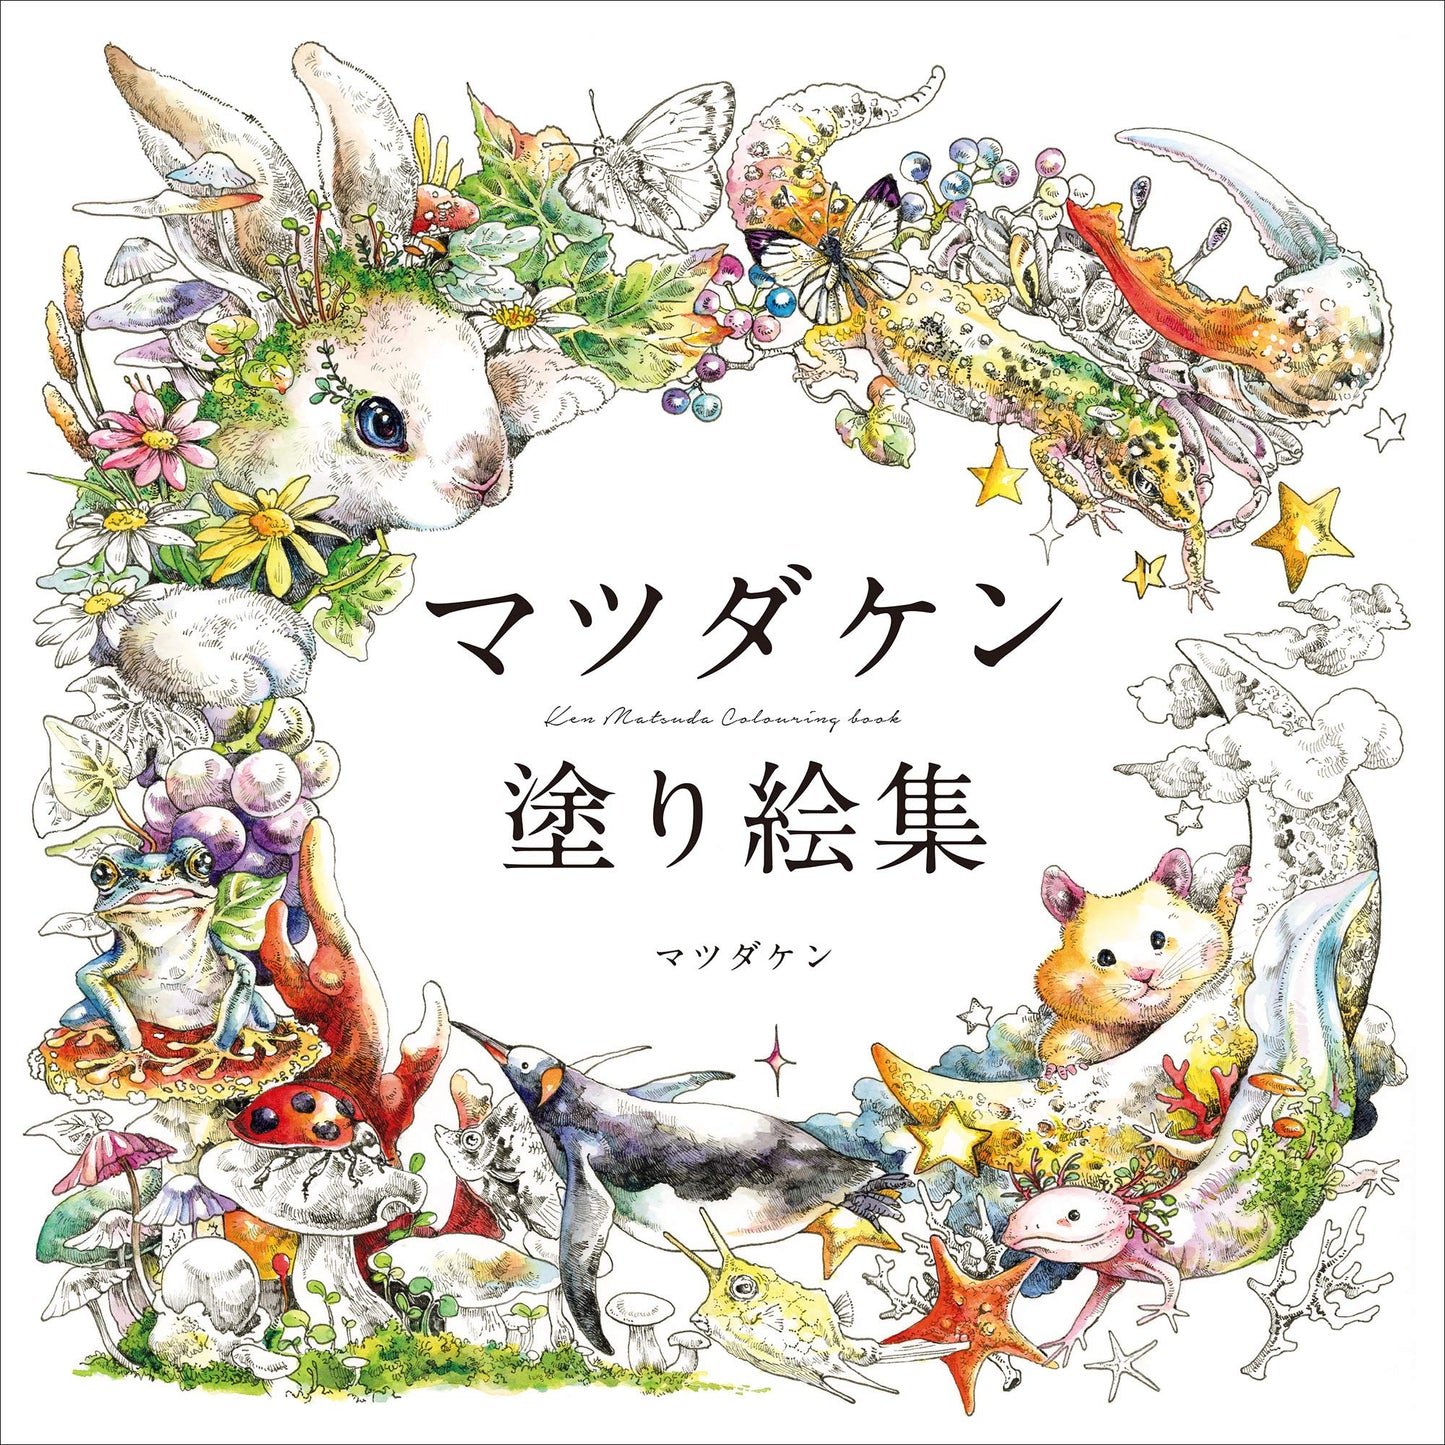 Ken Matsuda Artworks Coloring Book Animals Collection